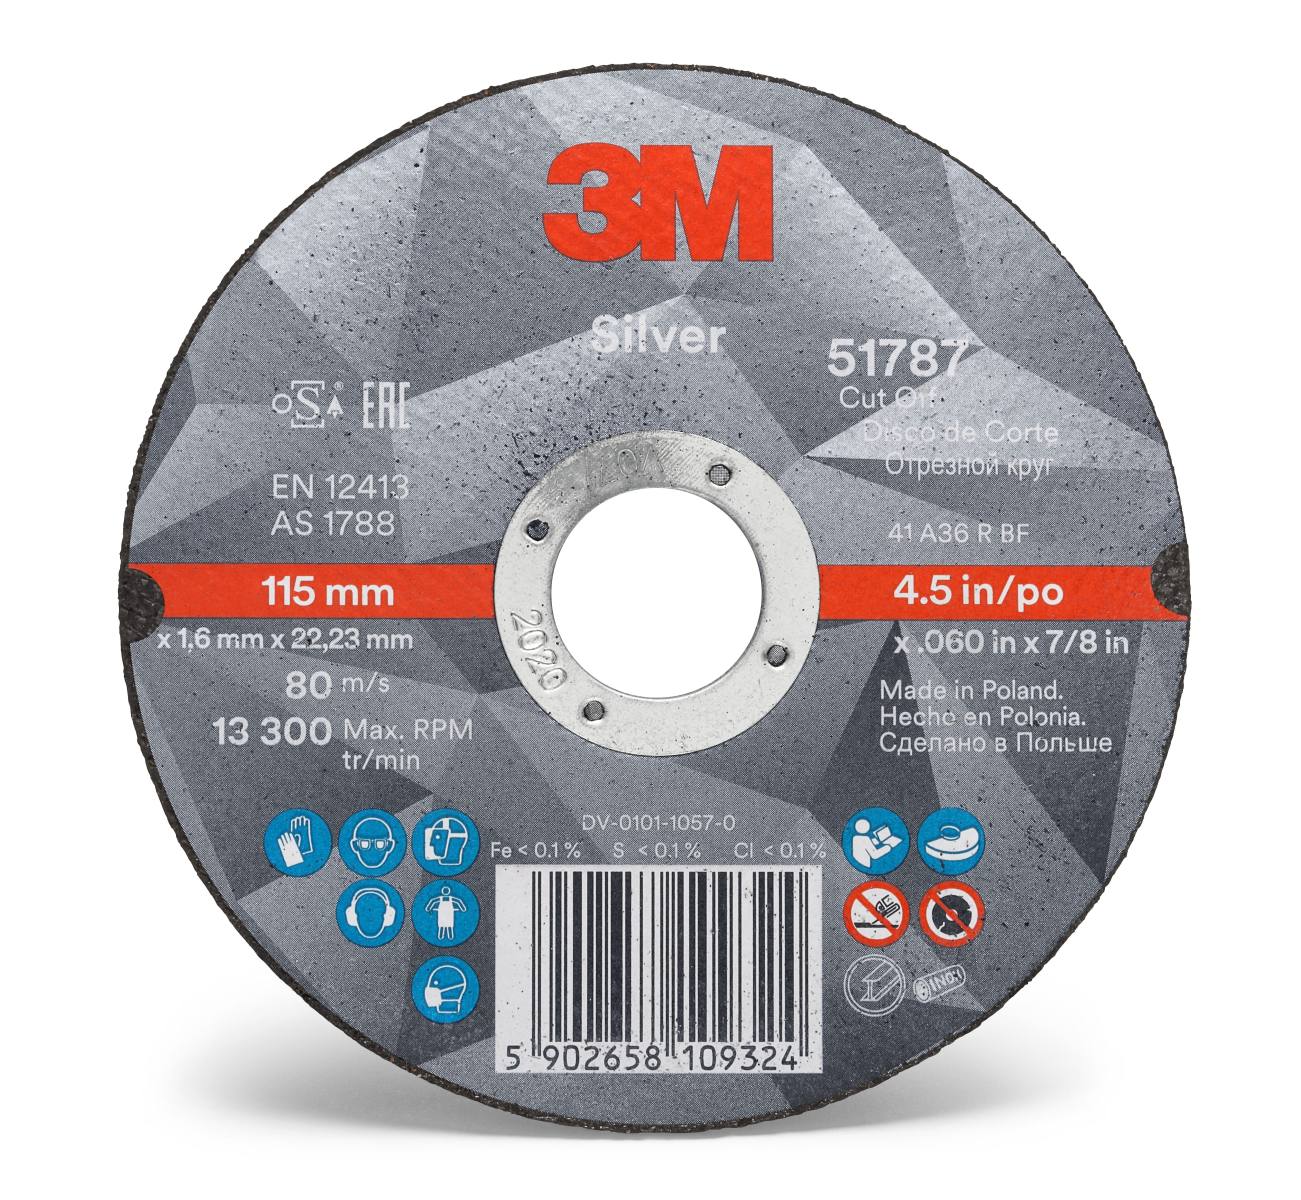 3M Silver Cut-Off Wheel cutting disc, 105 mm, 1.0 mm, 10 mm, T41, 51777